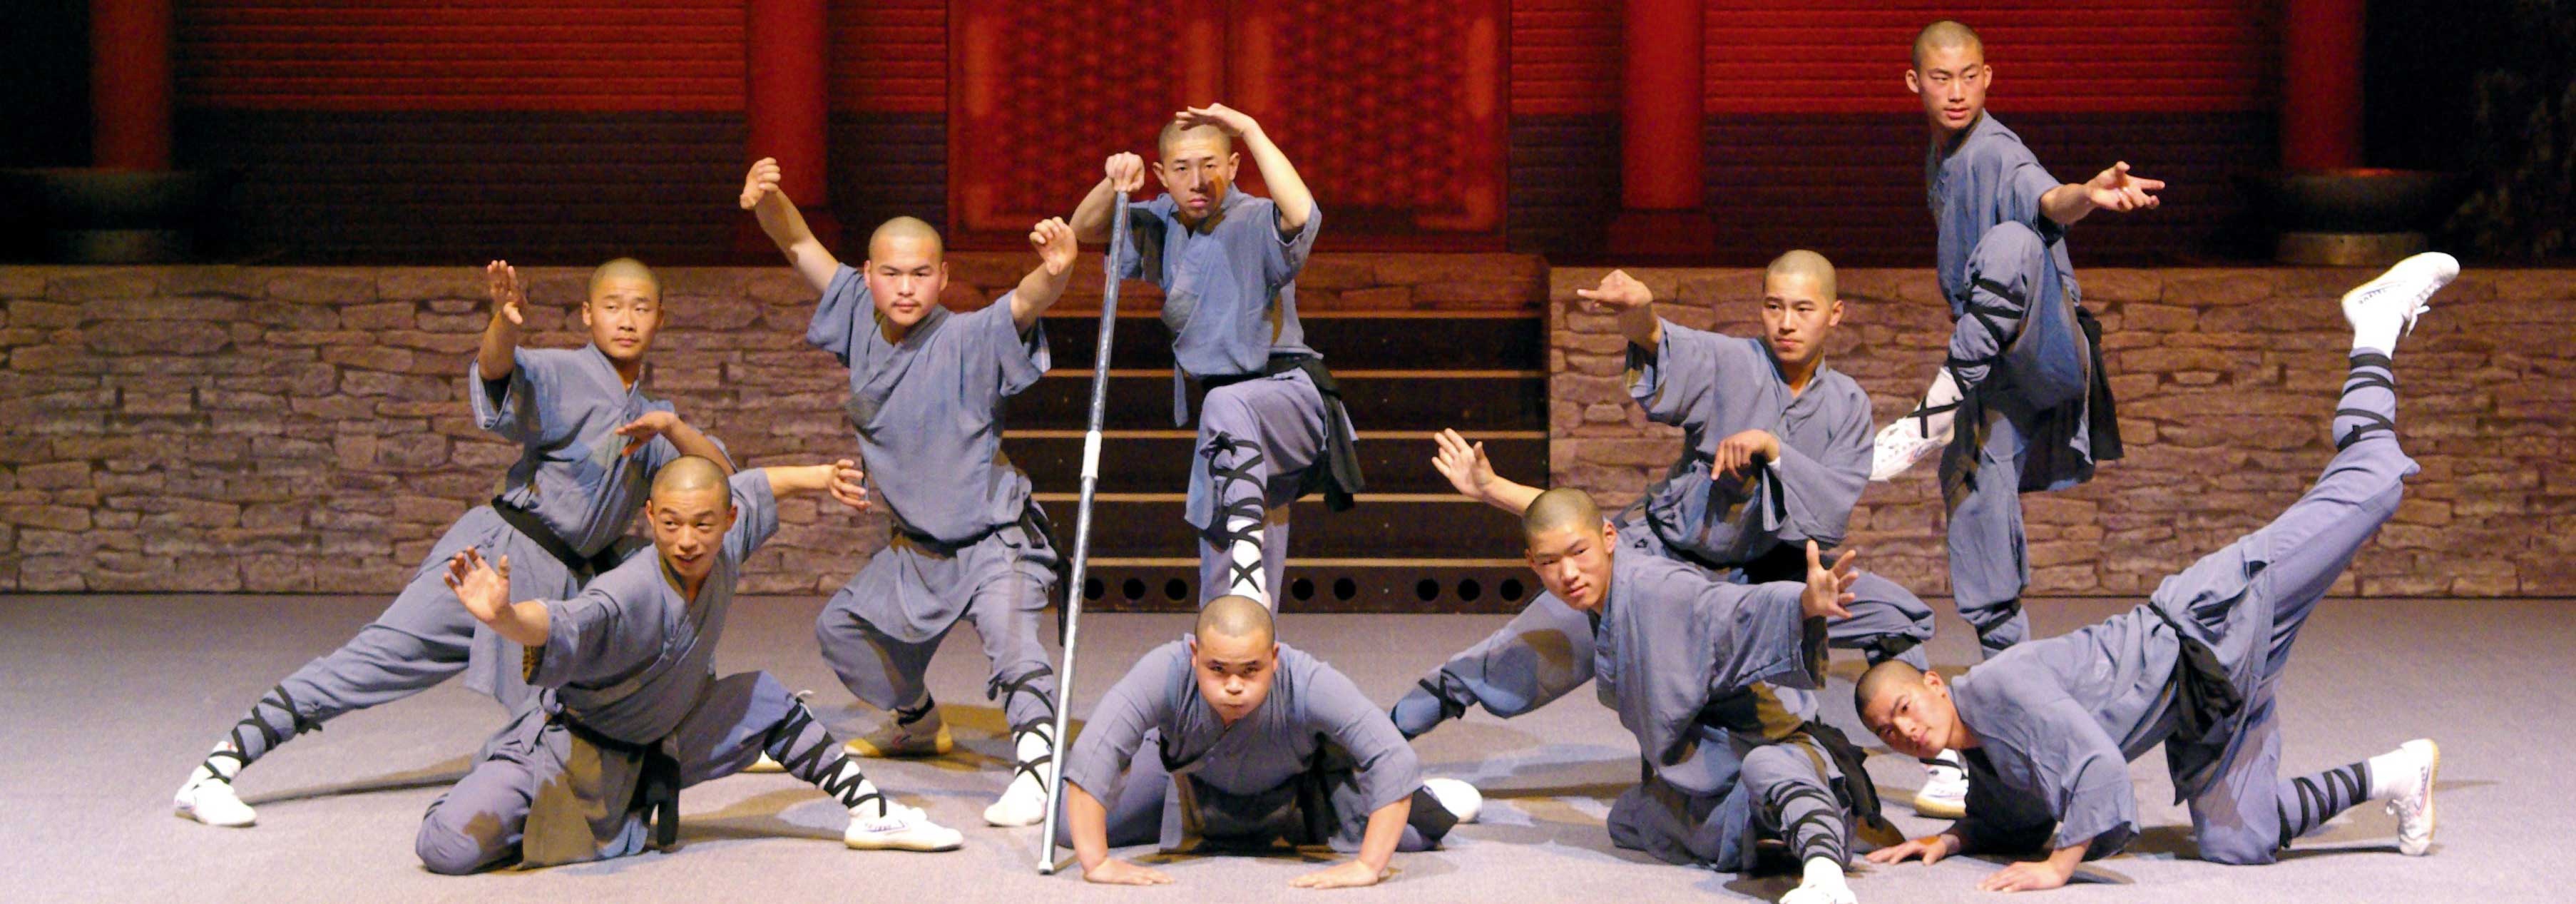 HD wallpaper, 3620X1270 Dual Screen Desktop, Spectacular Performances, Kung Fu Show, Desktop Dual Monitors Shaolin Kung Fu Background Photo, Life Of Shaolin Monks, Cultural Heritage